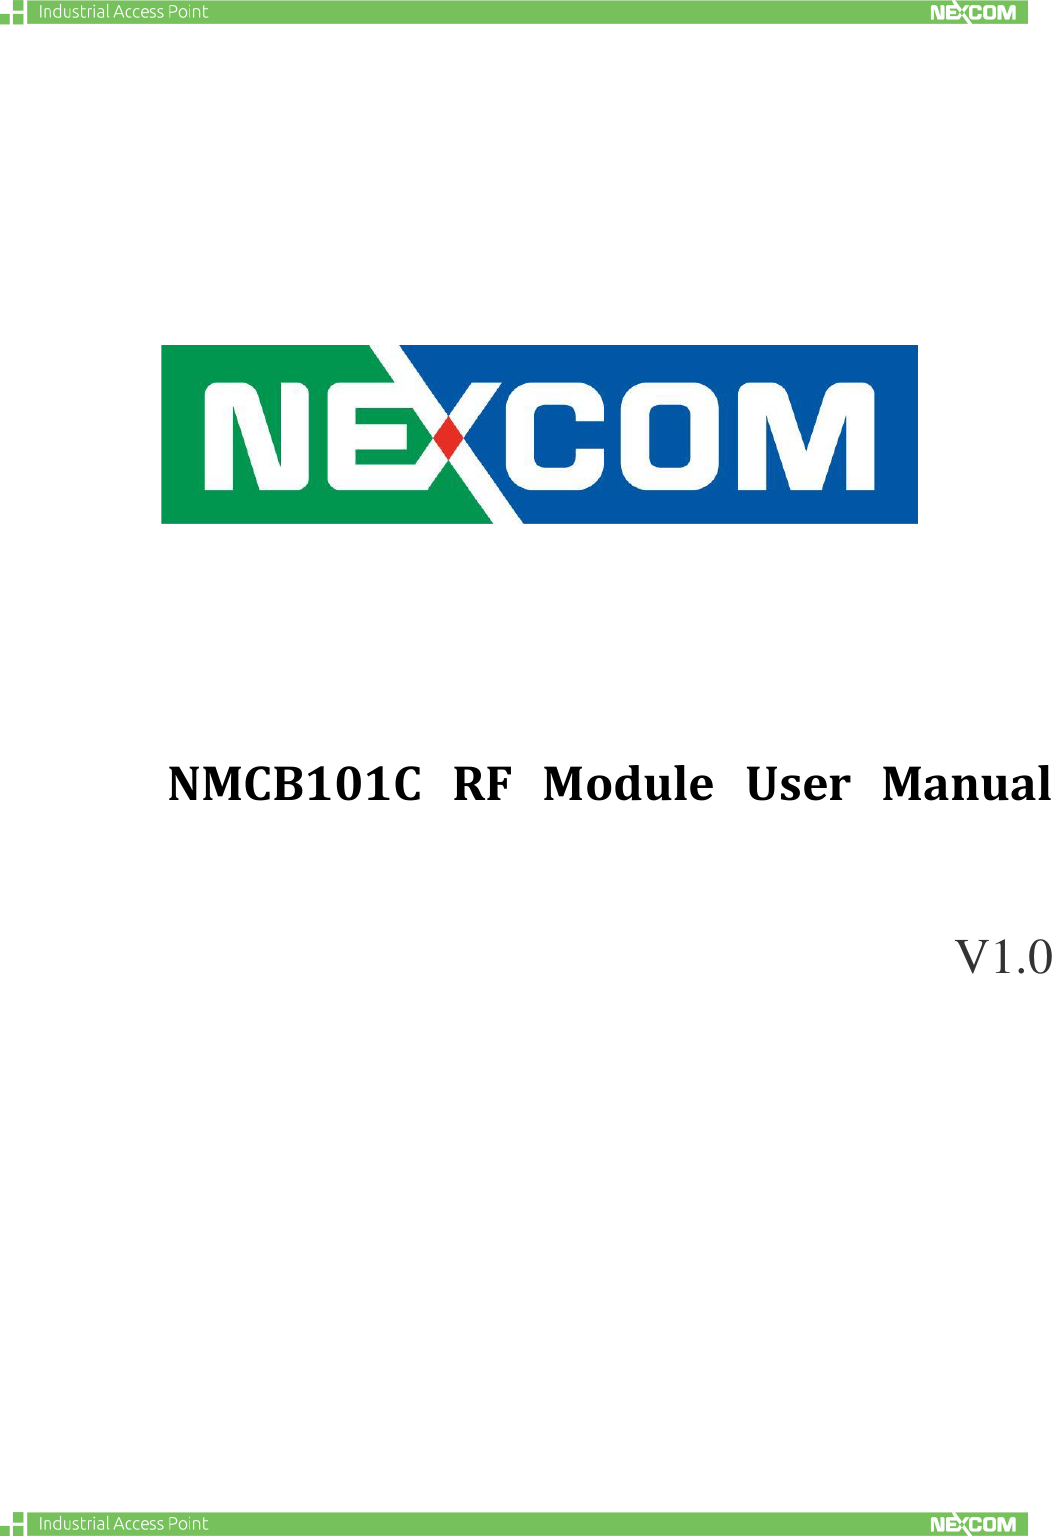                 NMCB101C  RF  Module  User  Manual  V1.0            